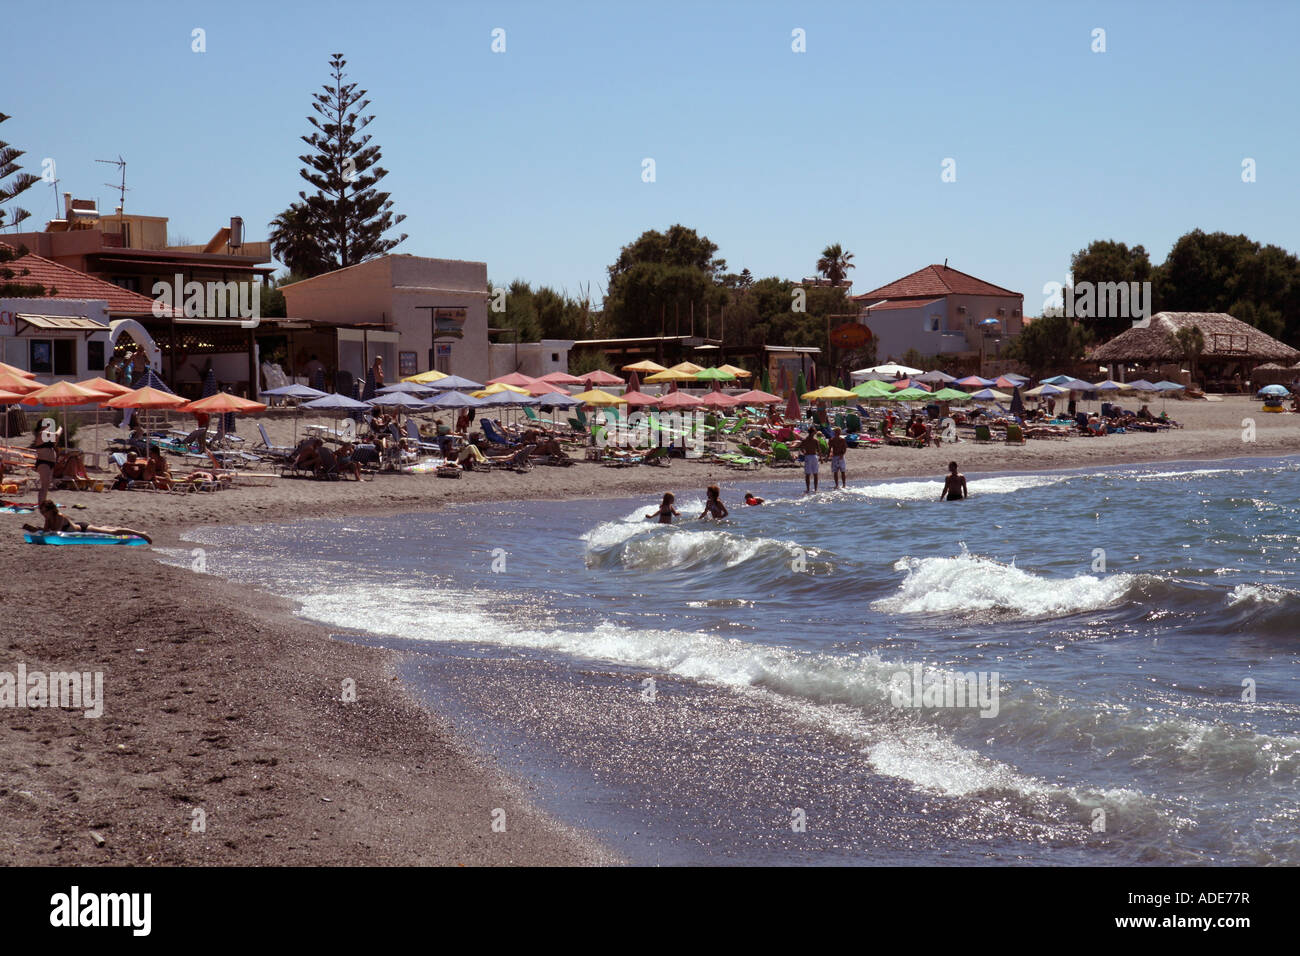 The beach at Platanias, Crete, Greece Stock Photo